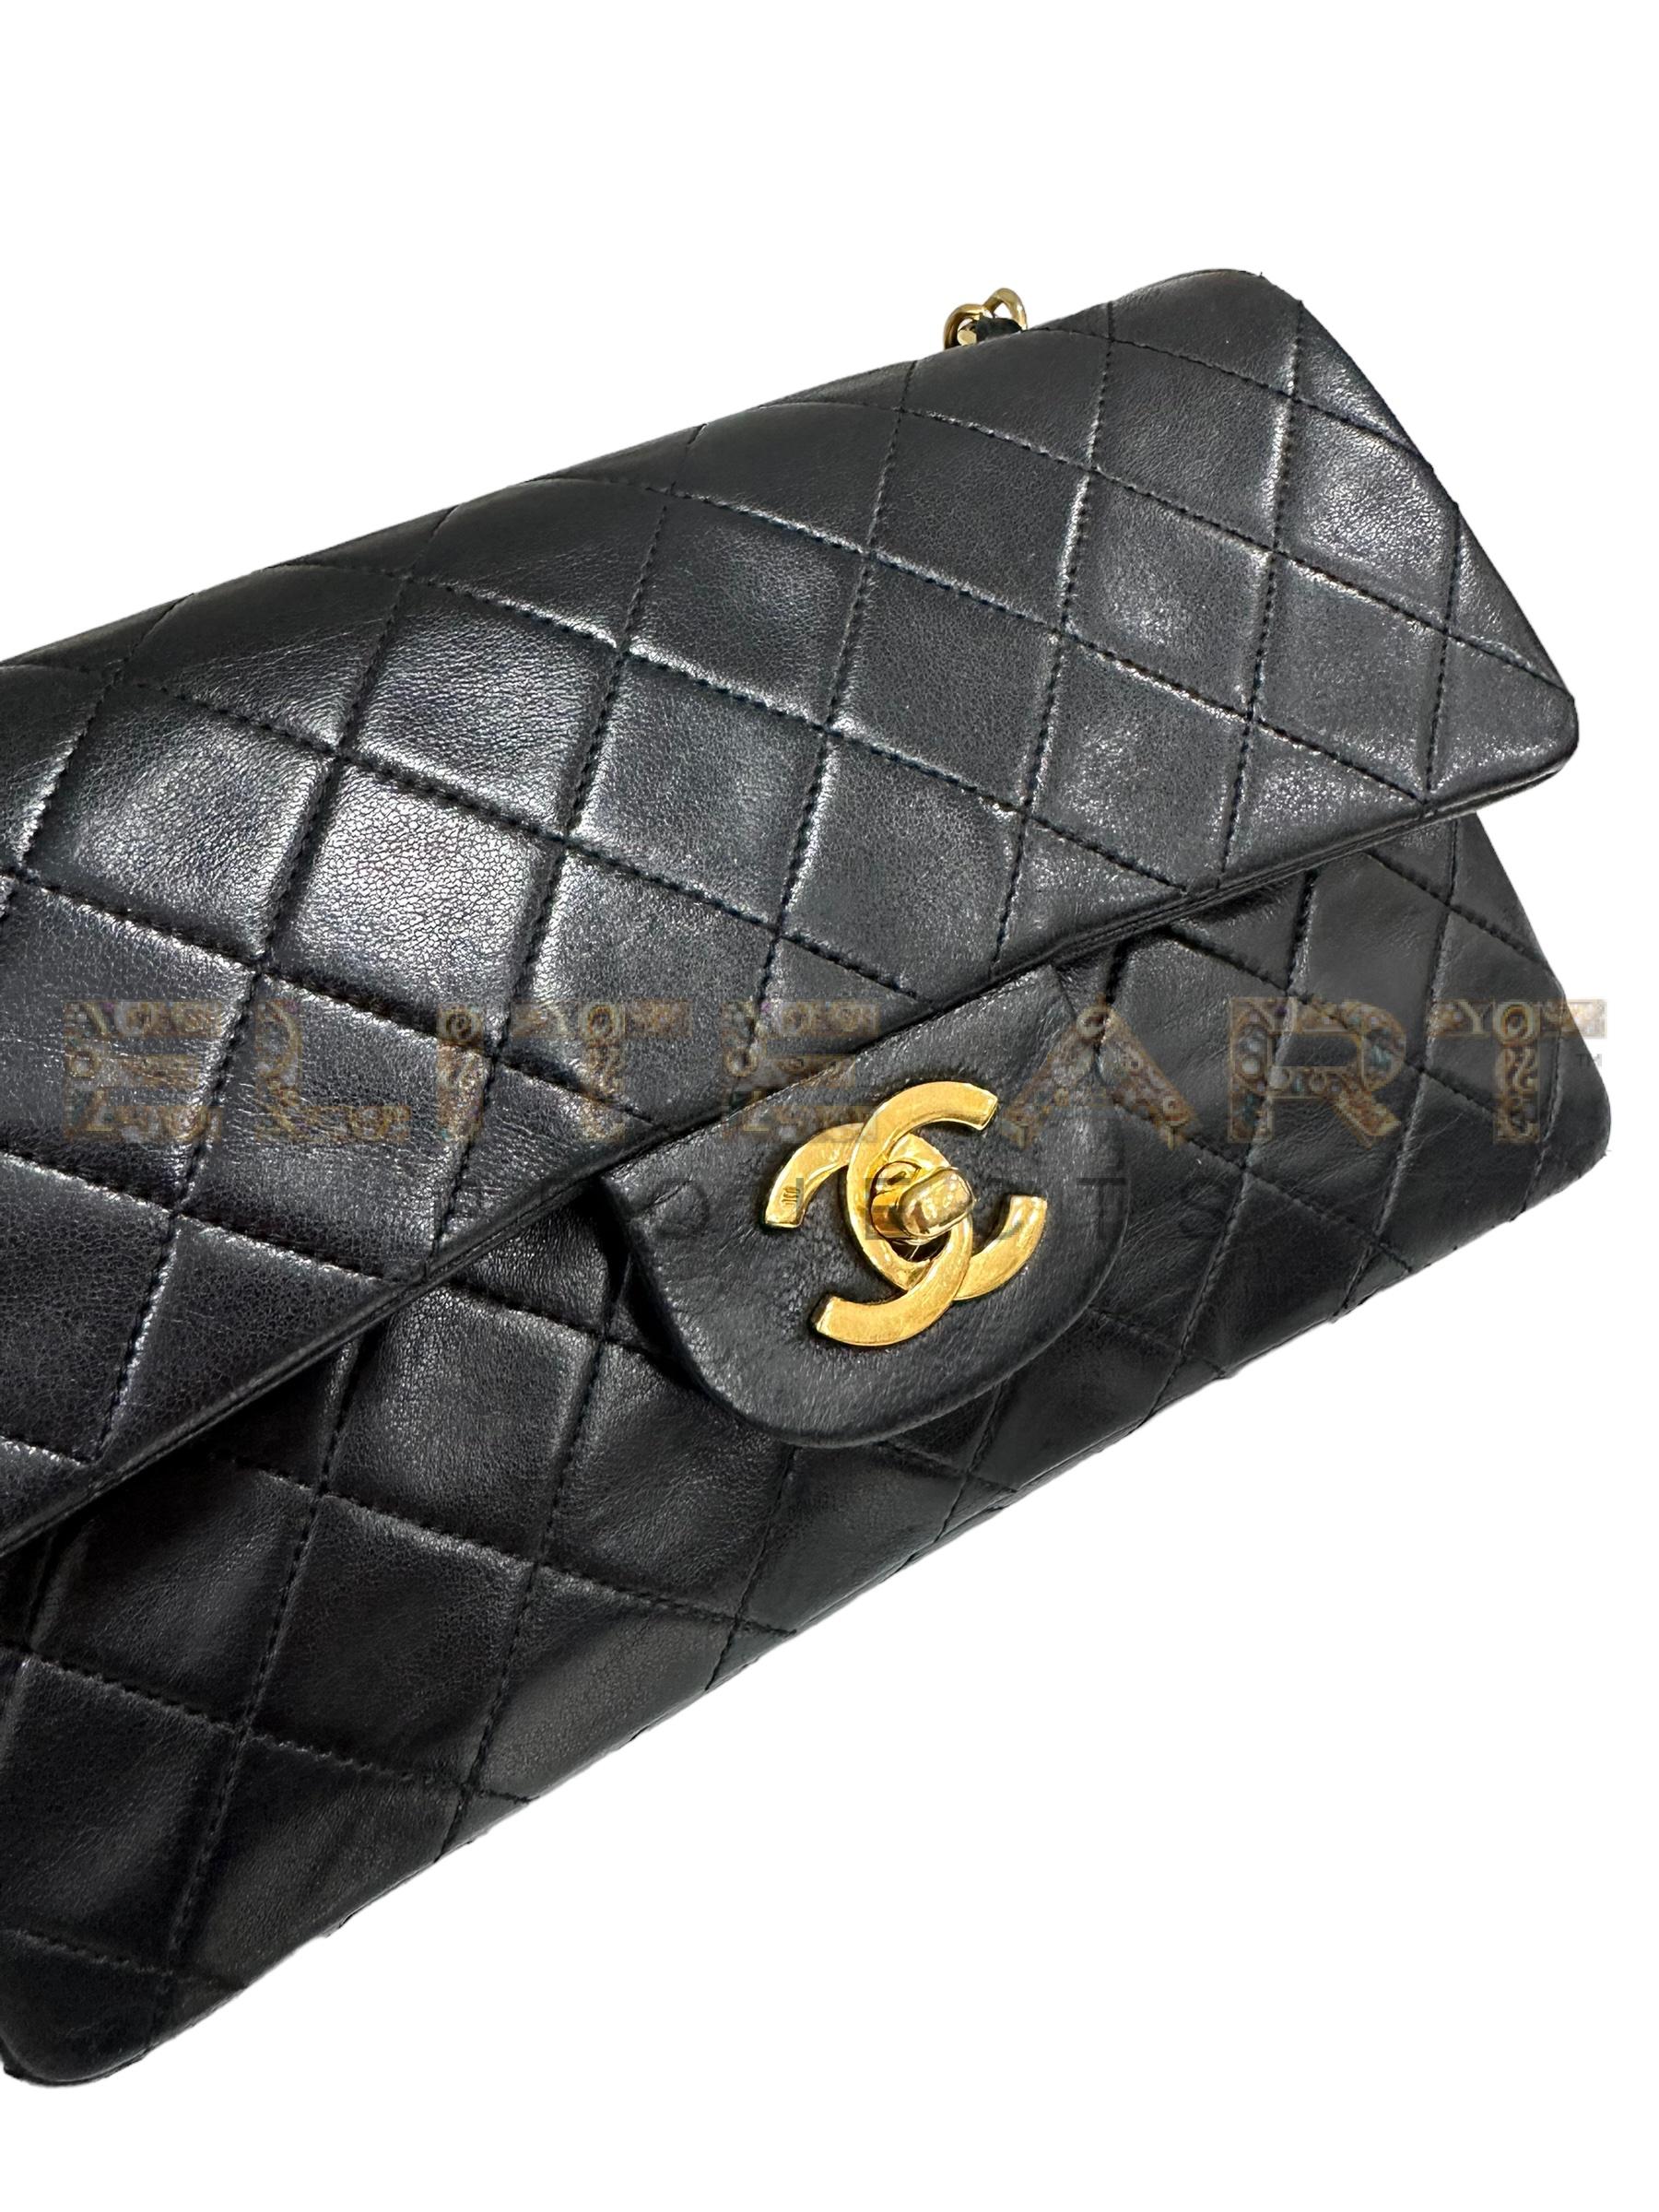 Chanel, Timeless bag, black leather, gold accents, double flap design, CC logo, Bordeaux interior